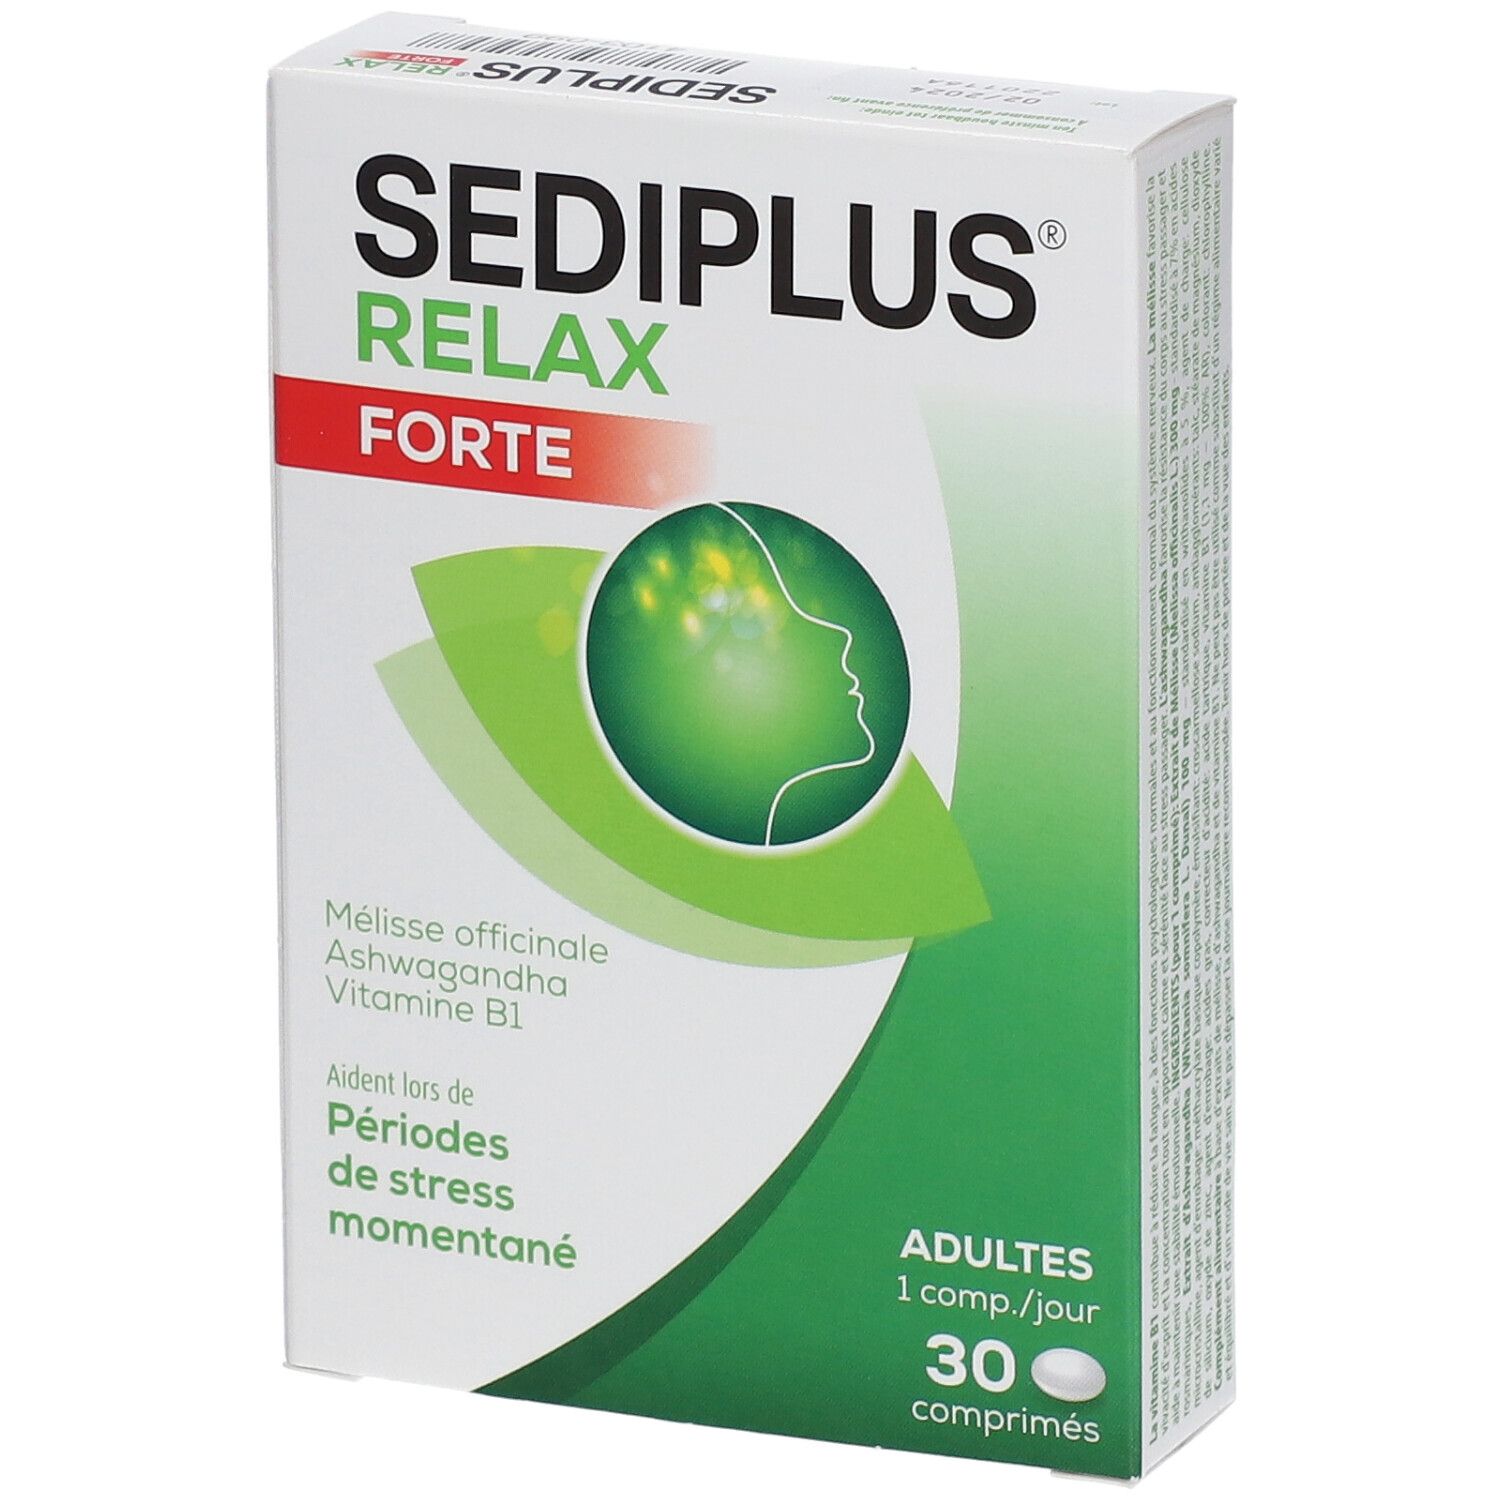 Sediplus® Relax Forte